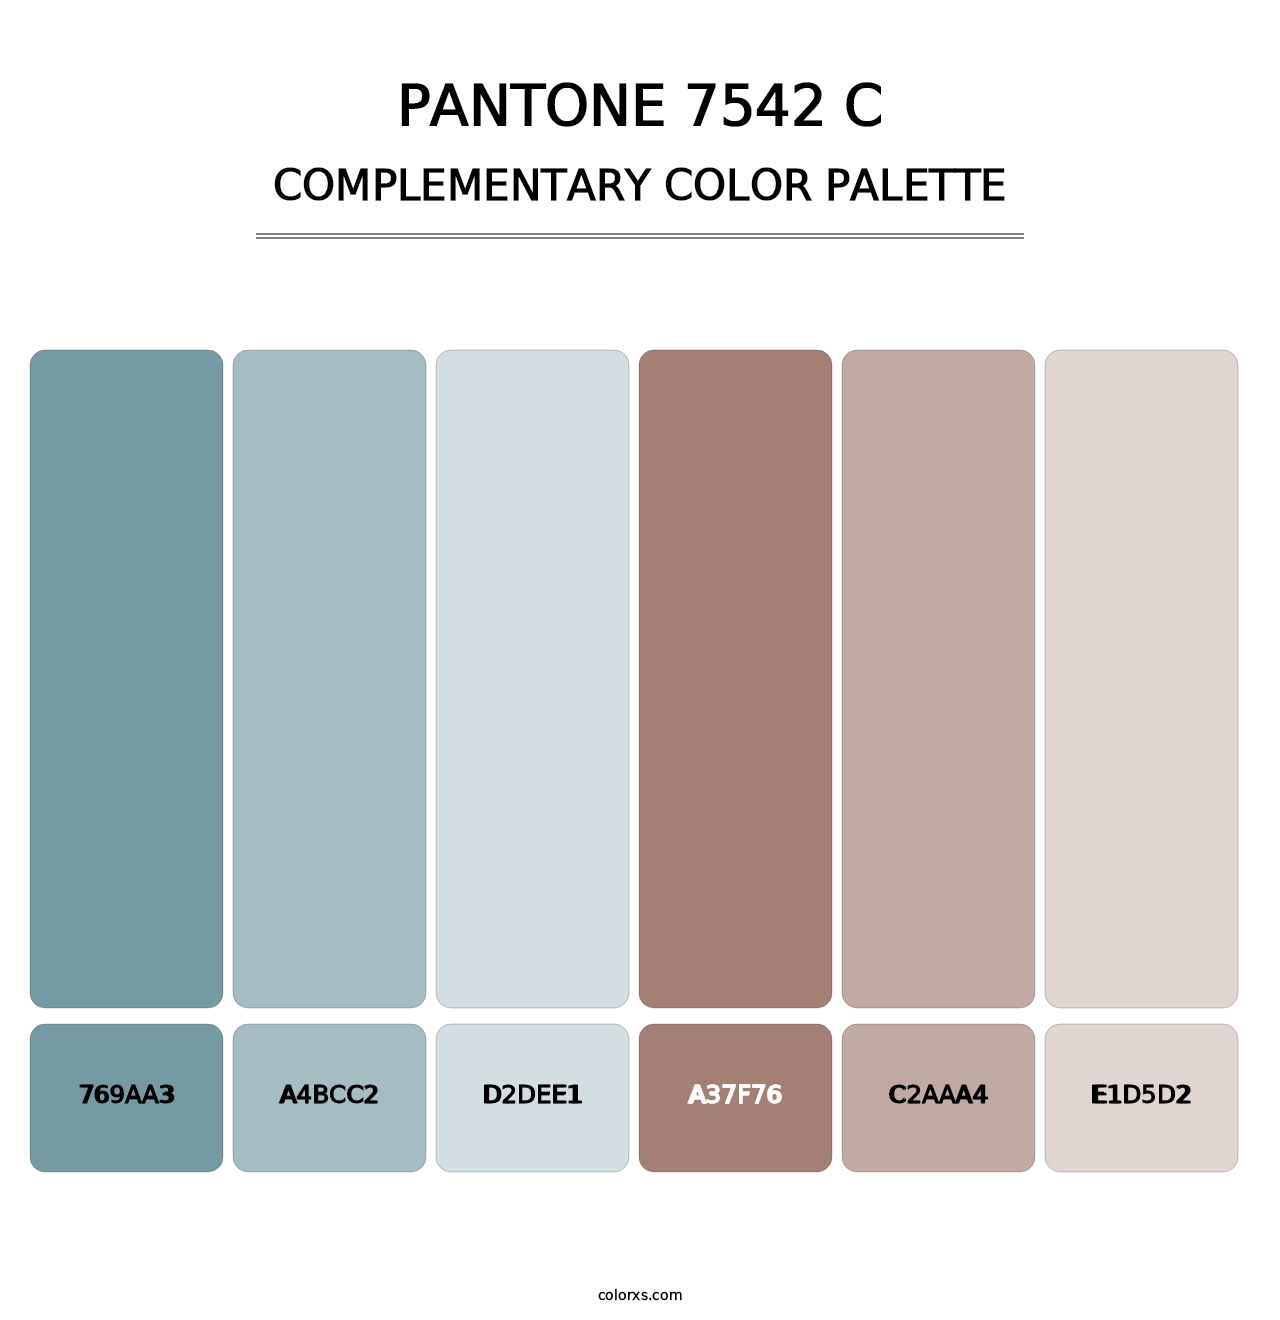 PANTONE 7542 C - Complementary Color Palette